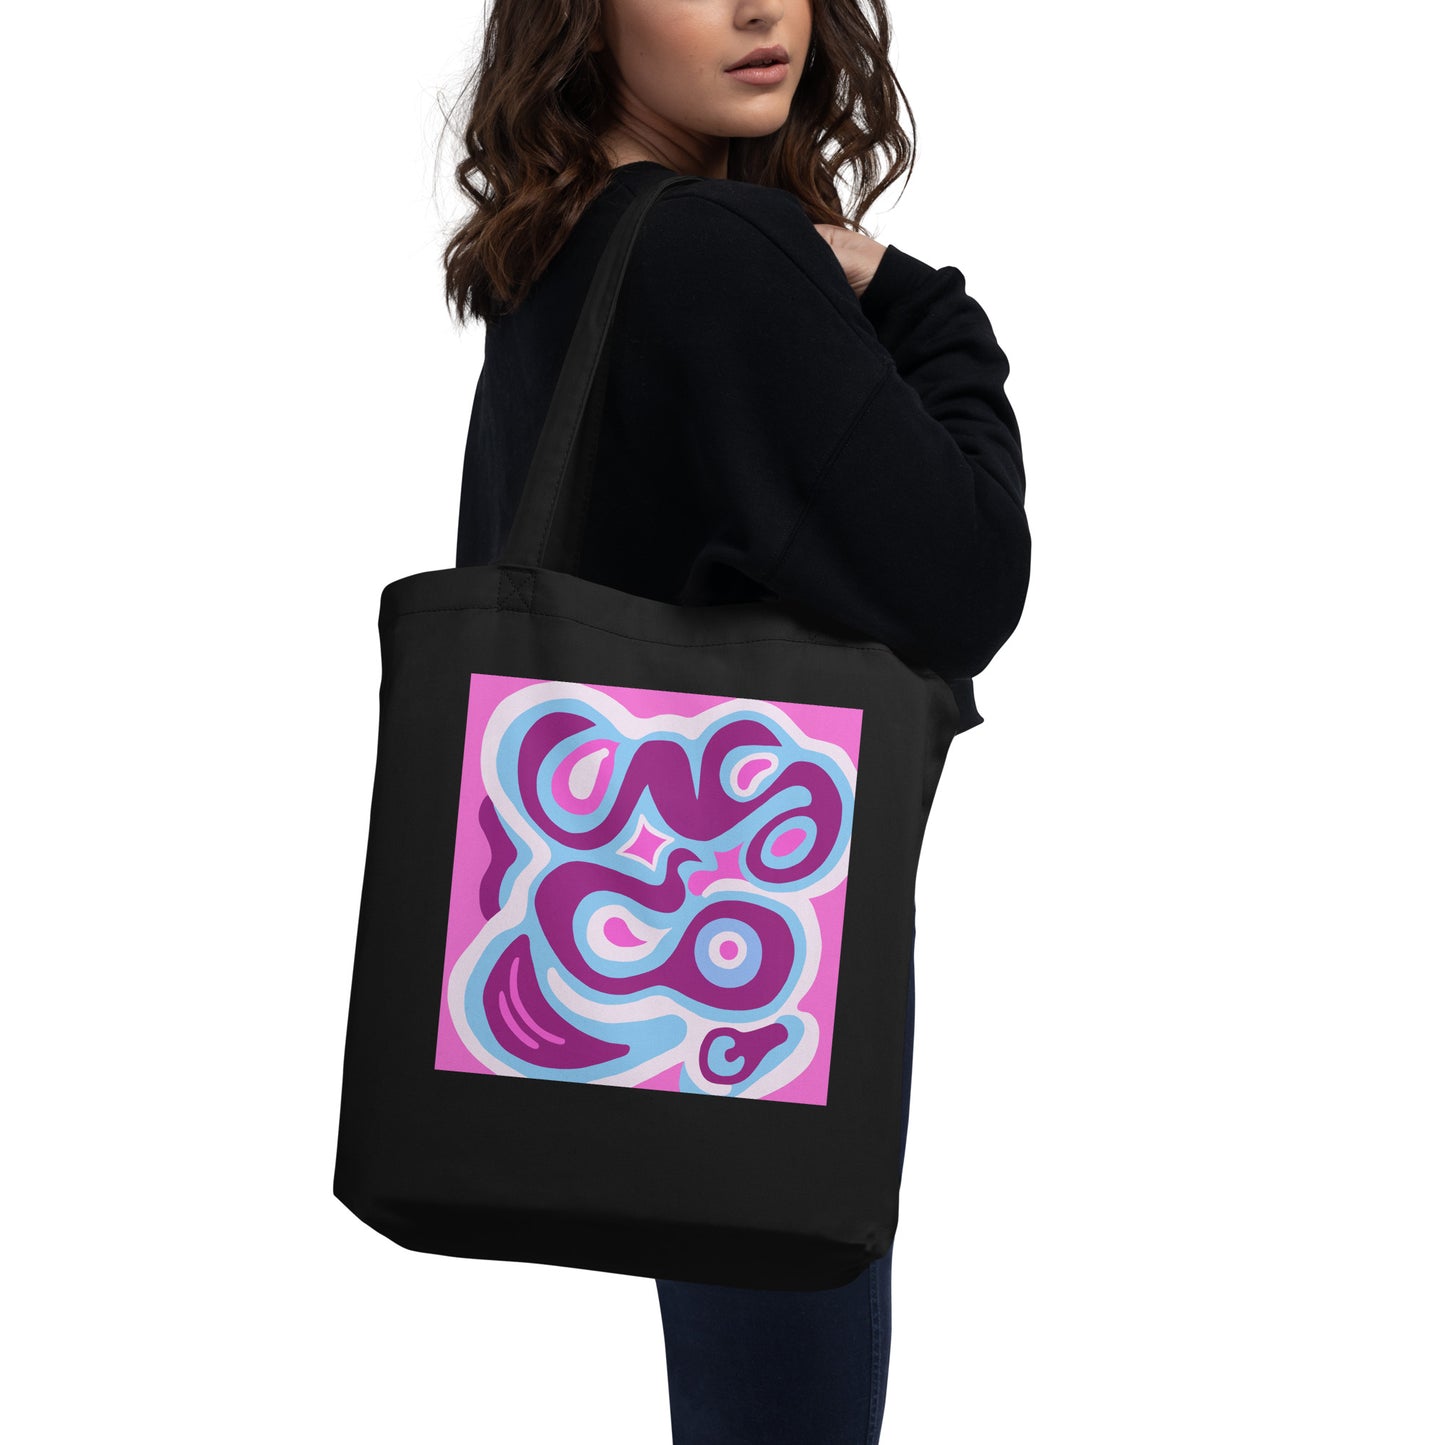 Dreamy Lilac Eco Tote Bag